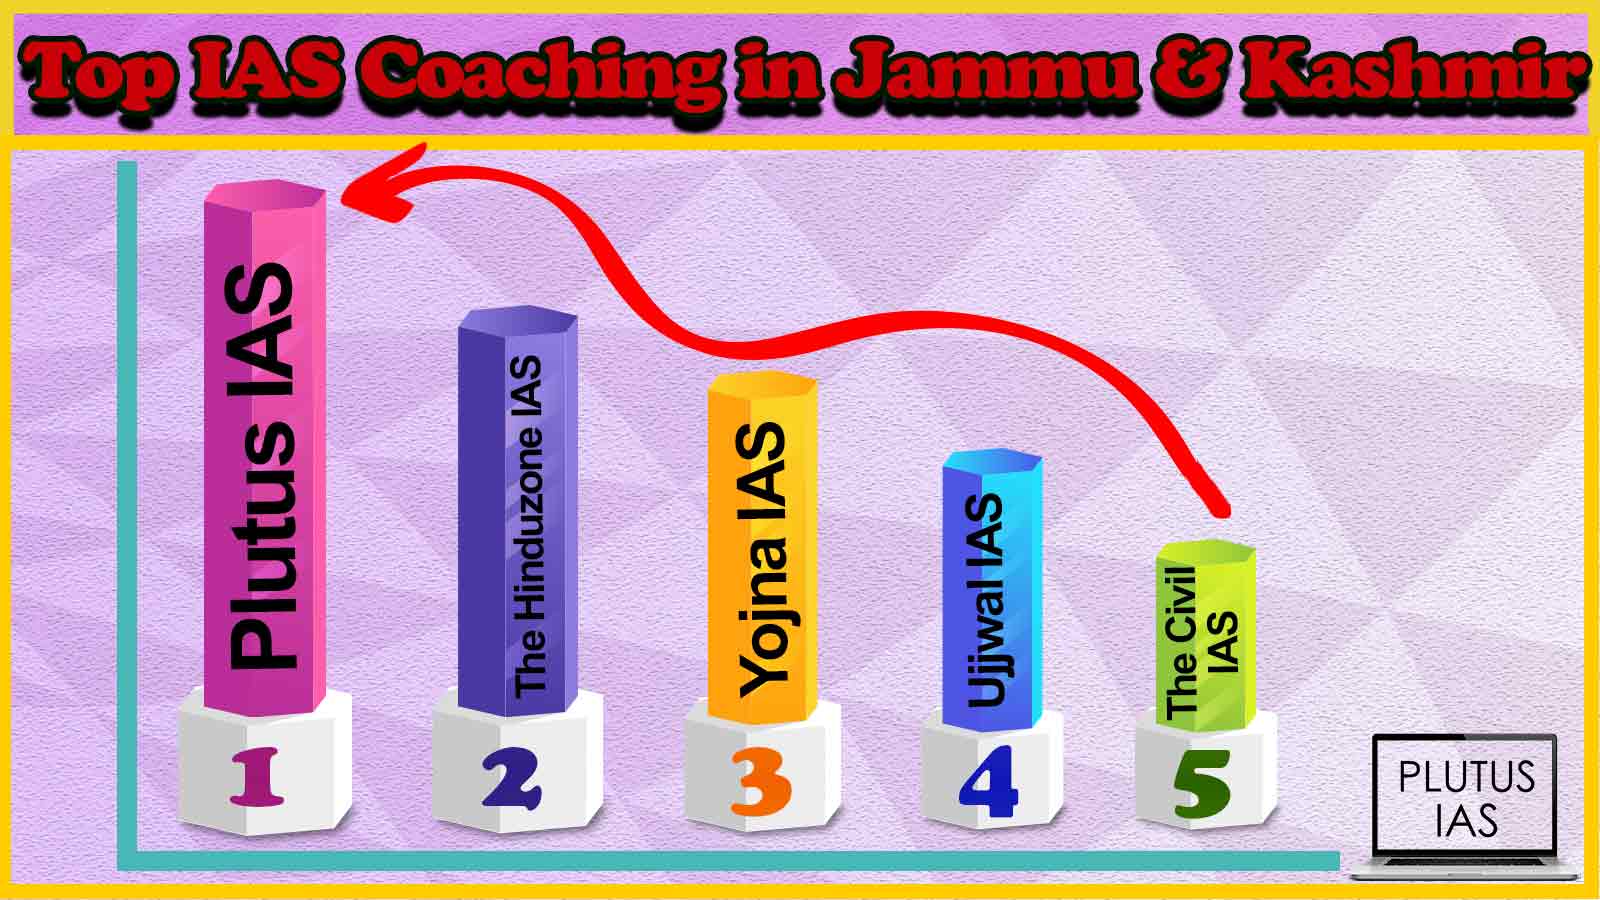 Best IAS Coaching in Jammu & Kashmir